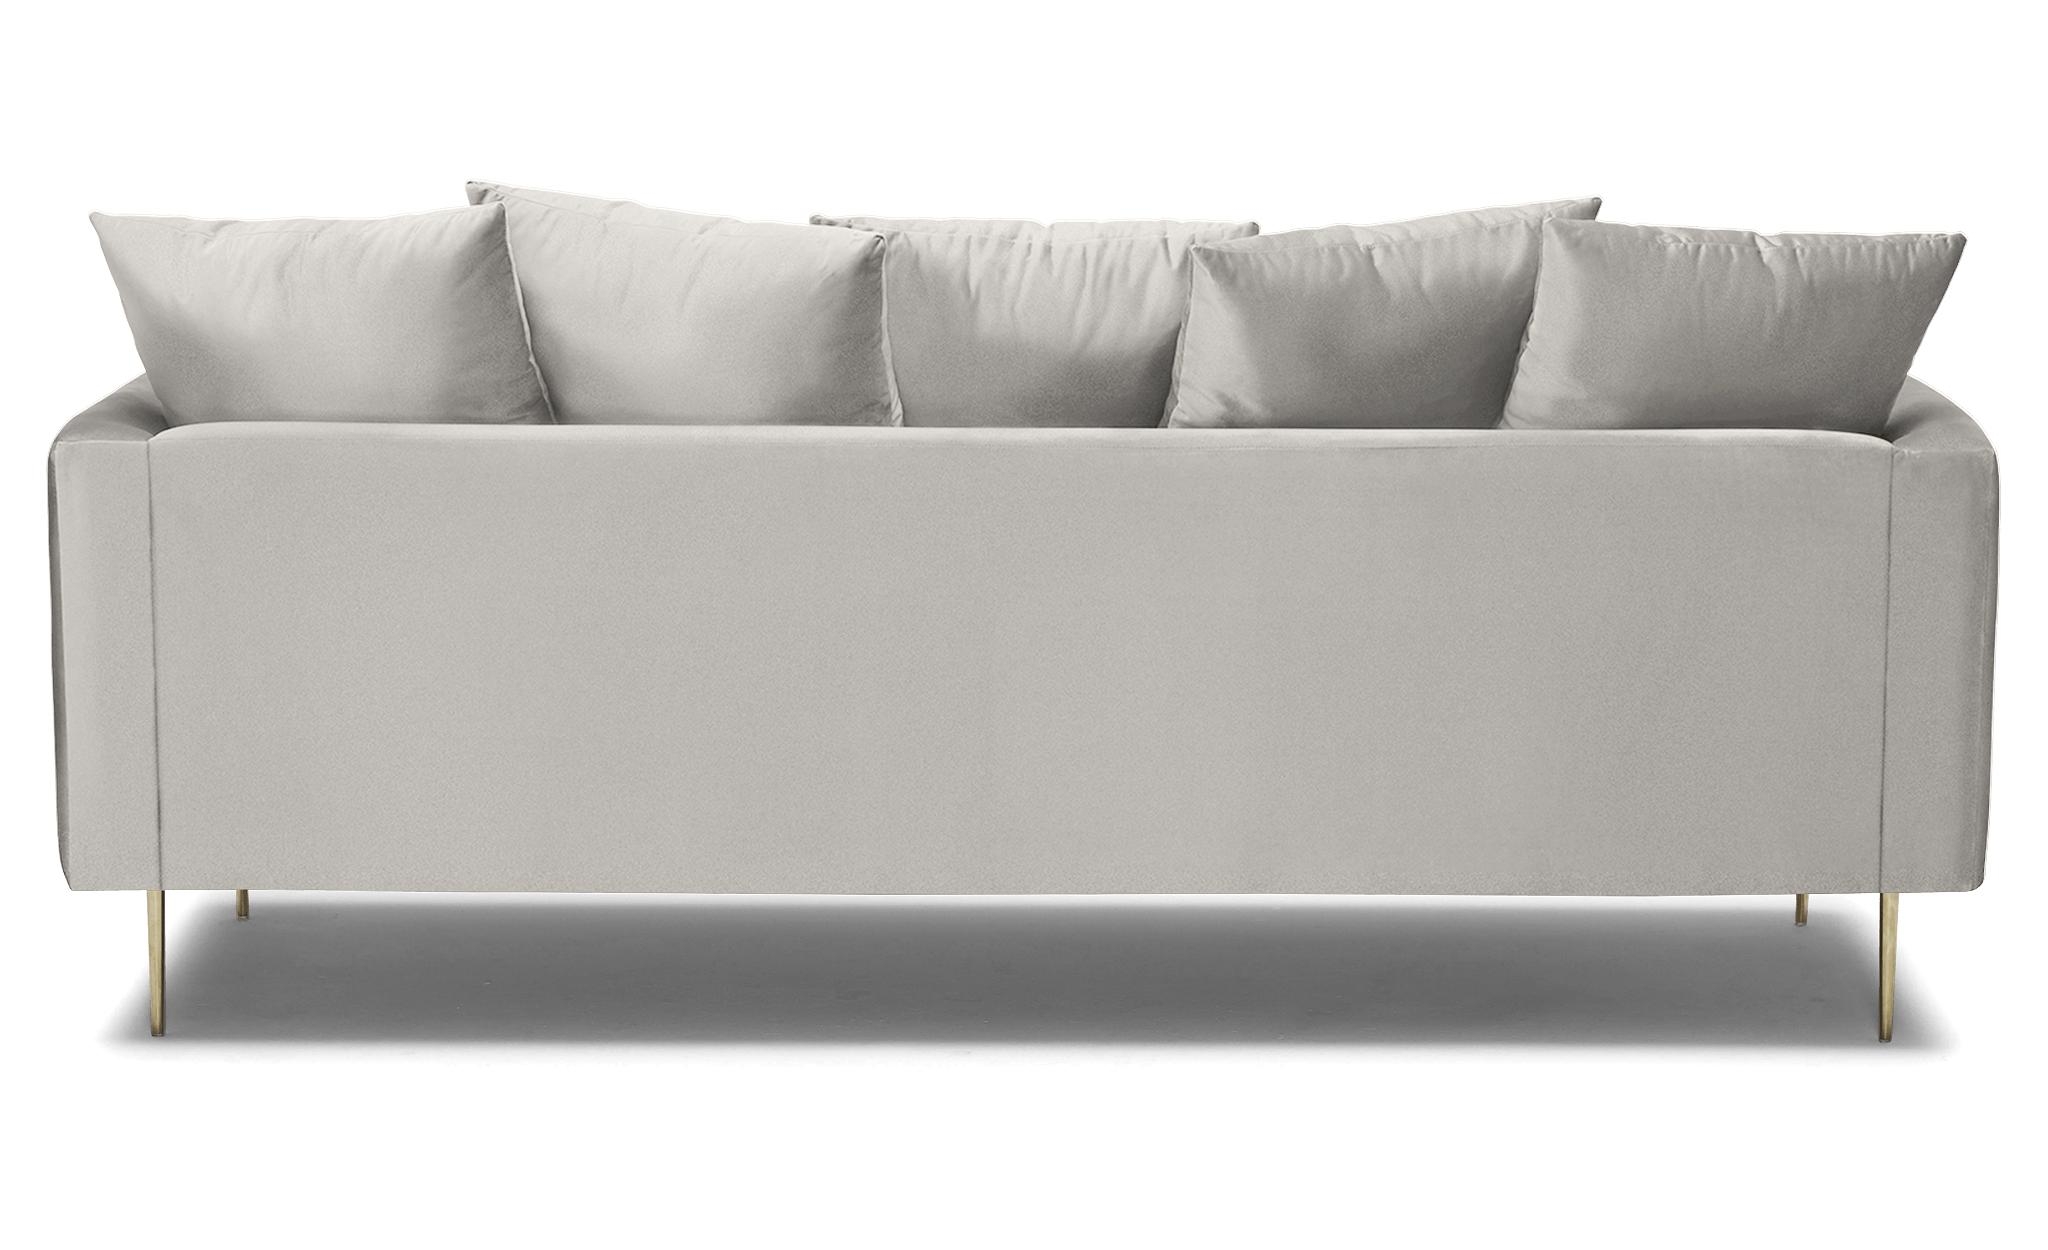 White Aime Mid Century Modern Sofa - Tussah Snow - Image 4